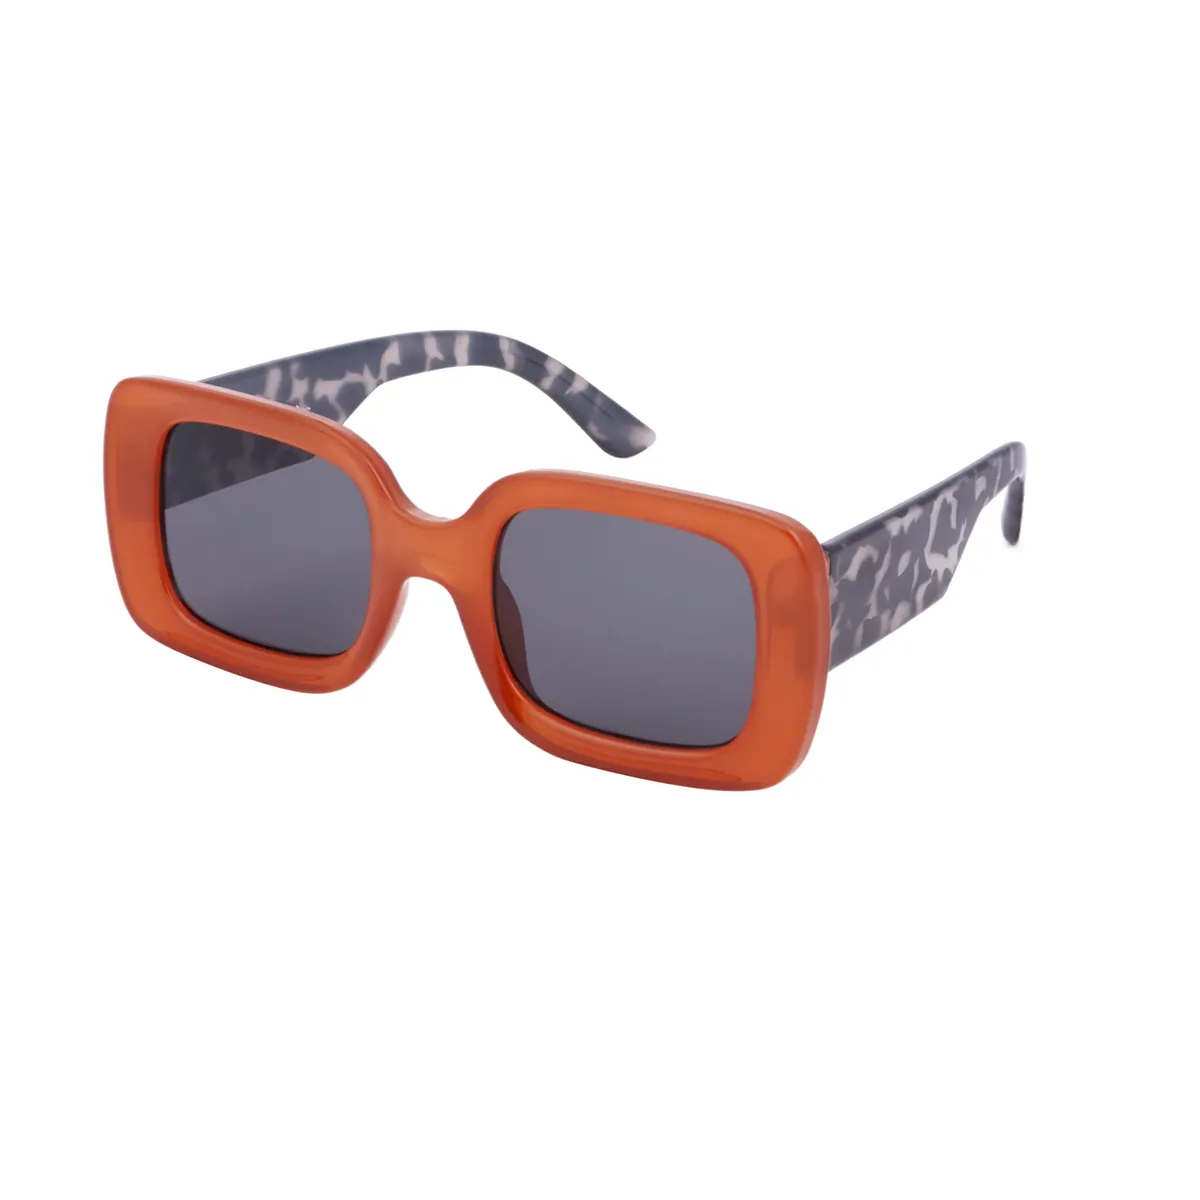 Anastasia - Square Red Sunglasses for Women